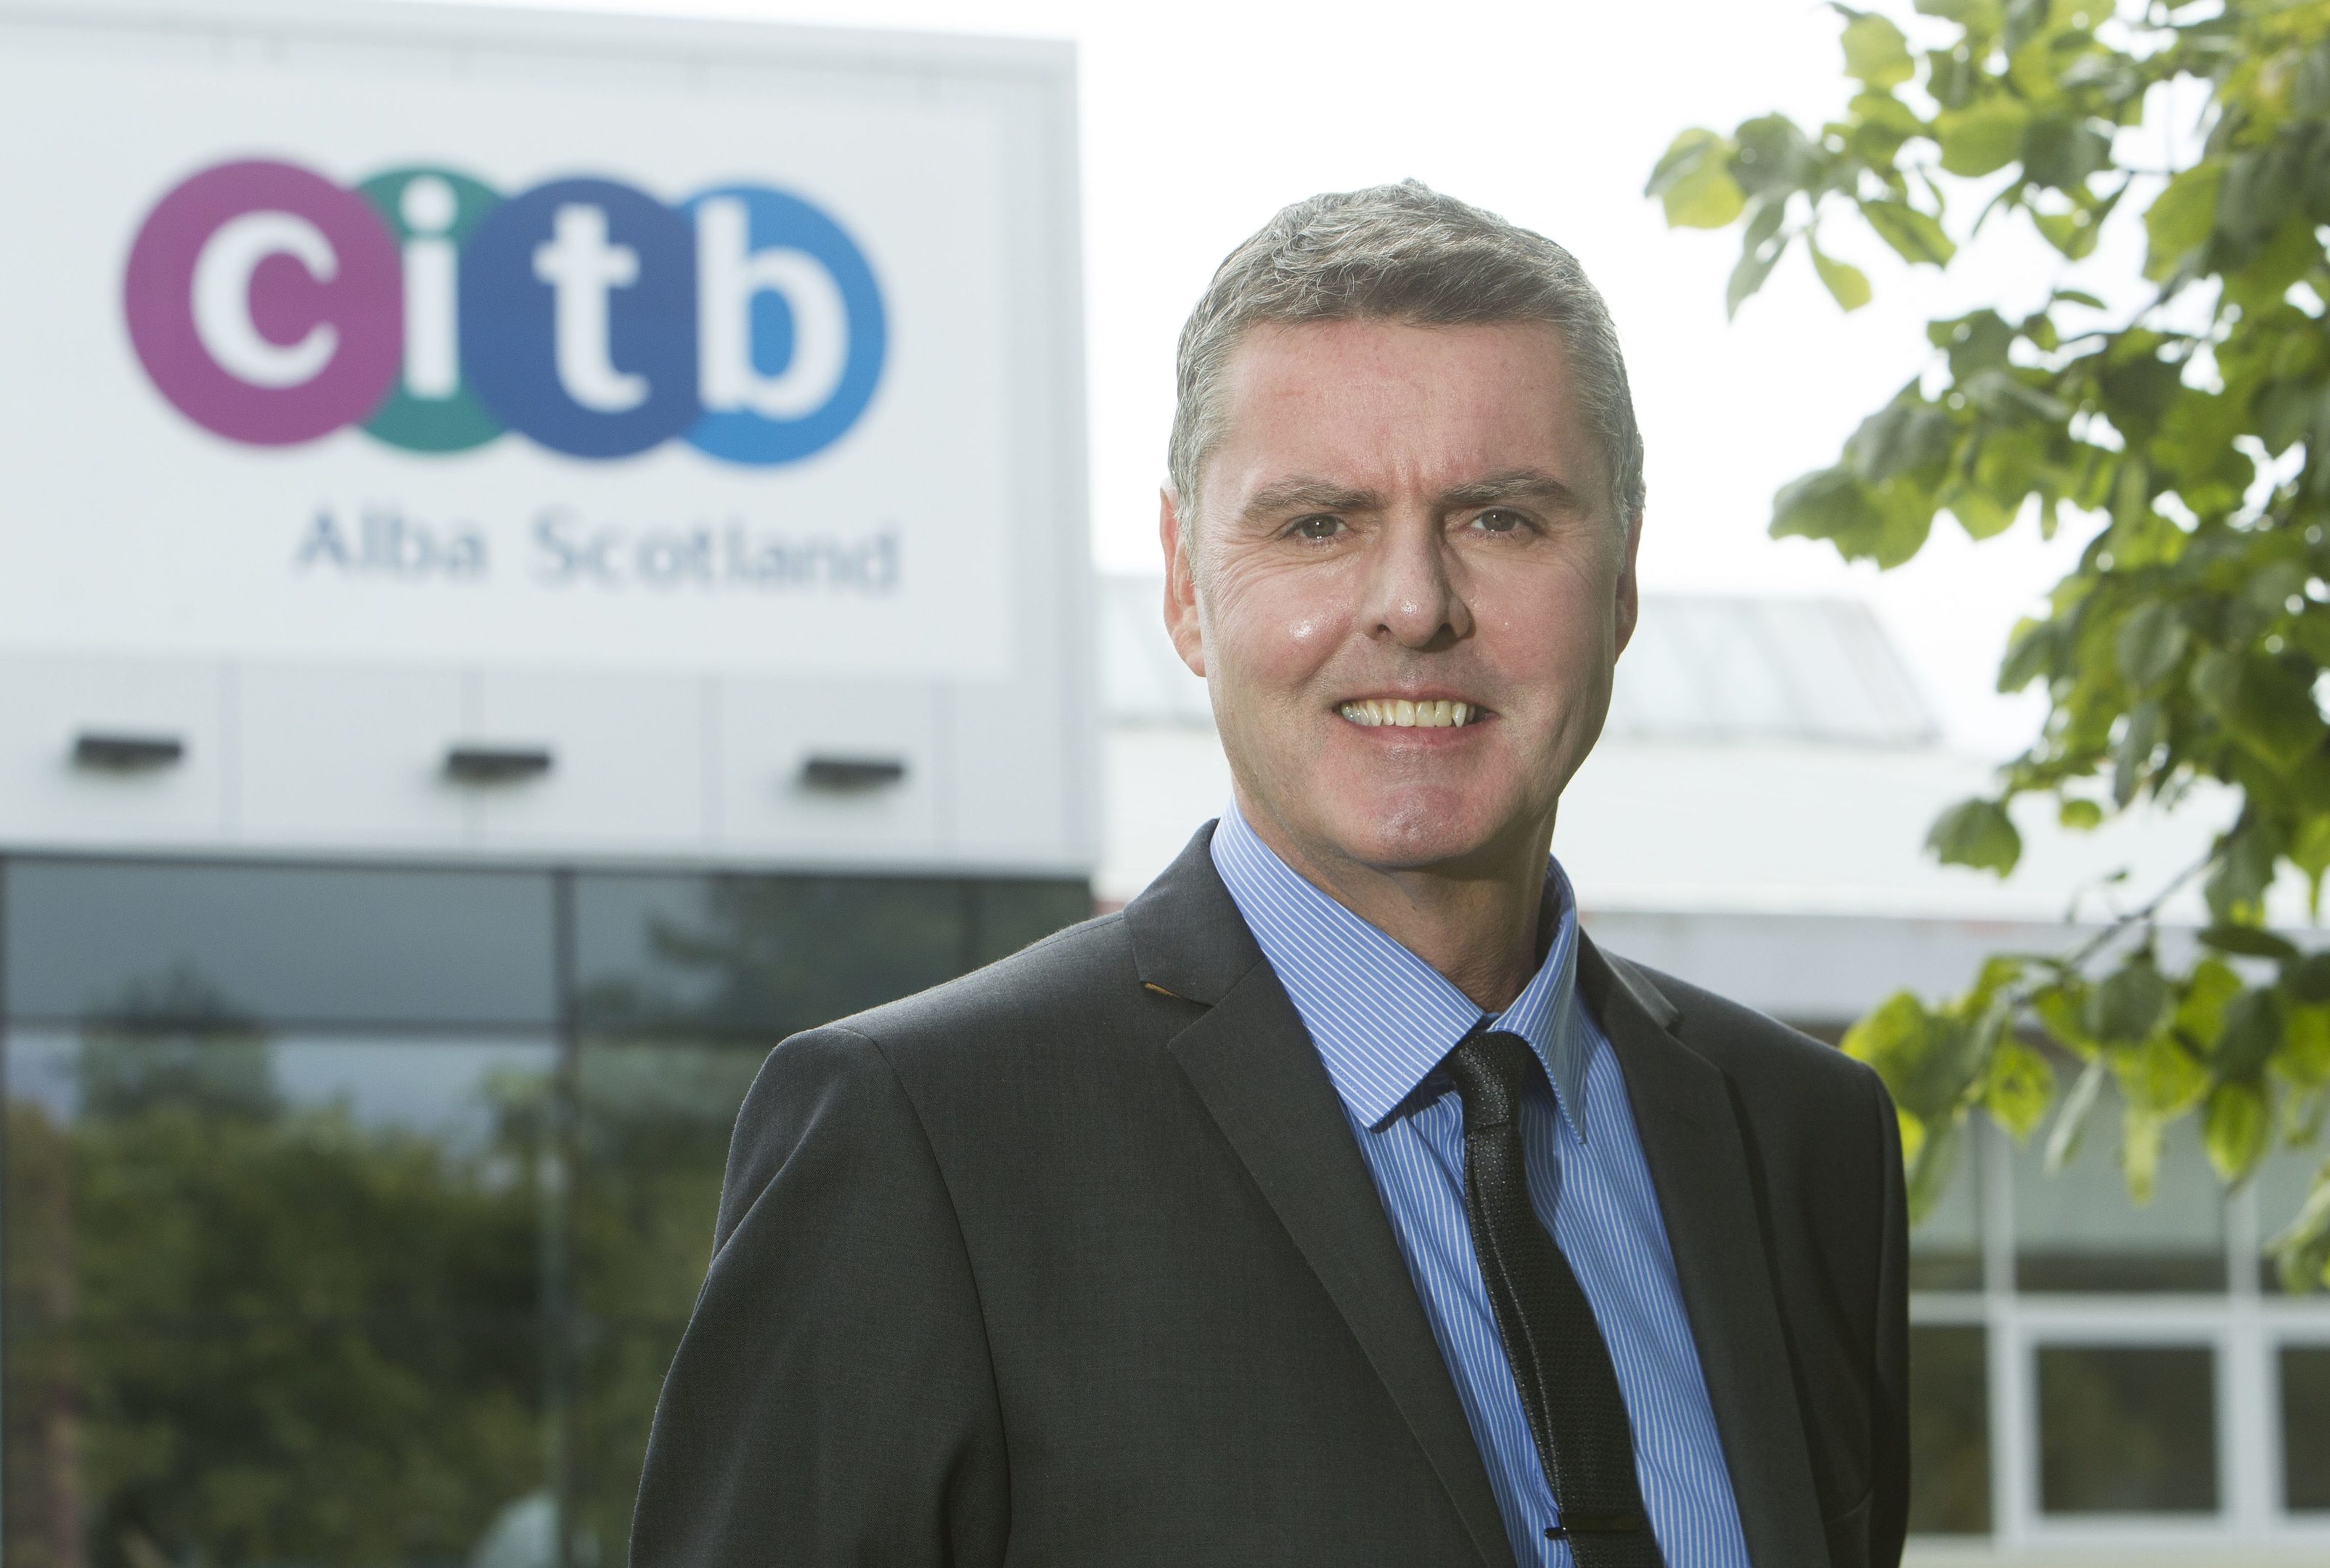 CITB invests £1.3m to help rural Scottish communities reduce skills gap